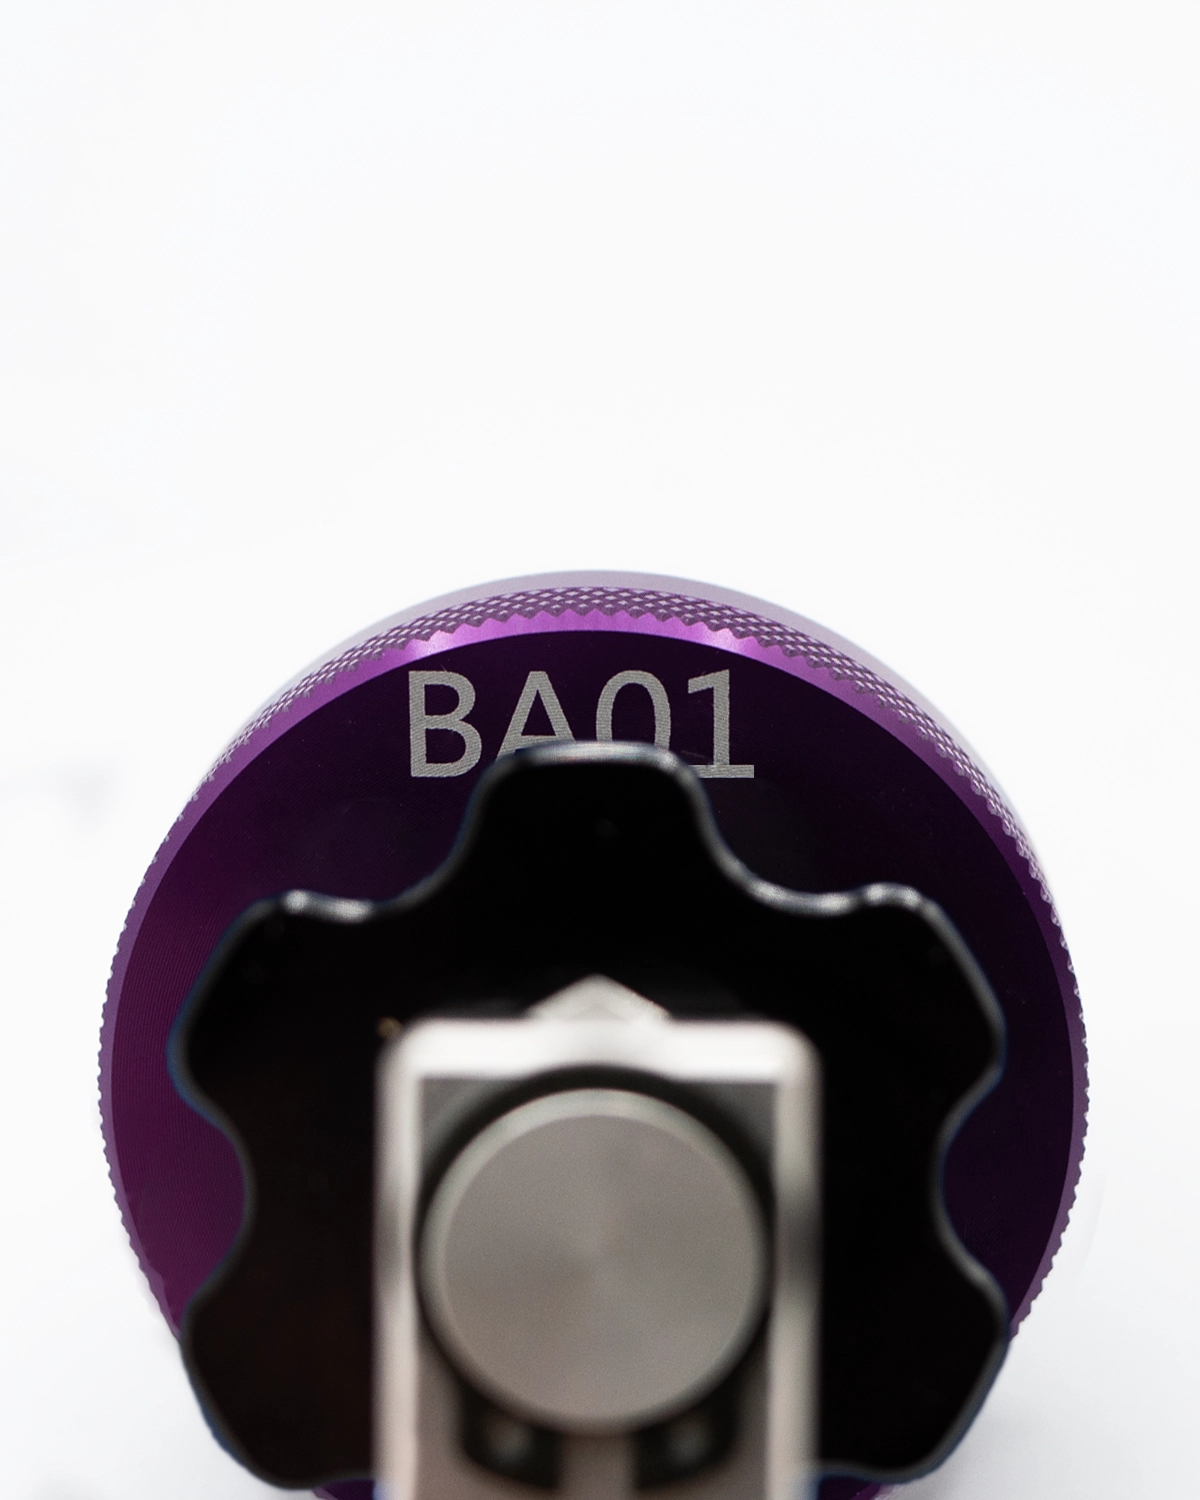 Chrysler (Violet) 3-Tab Brake Adapter (BA01)